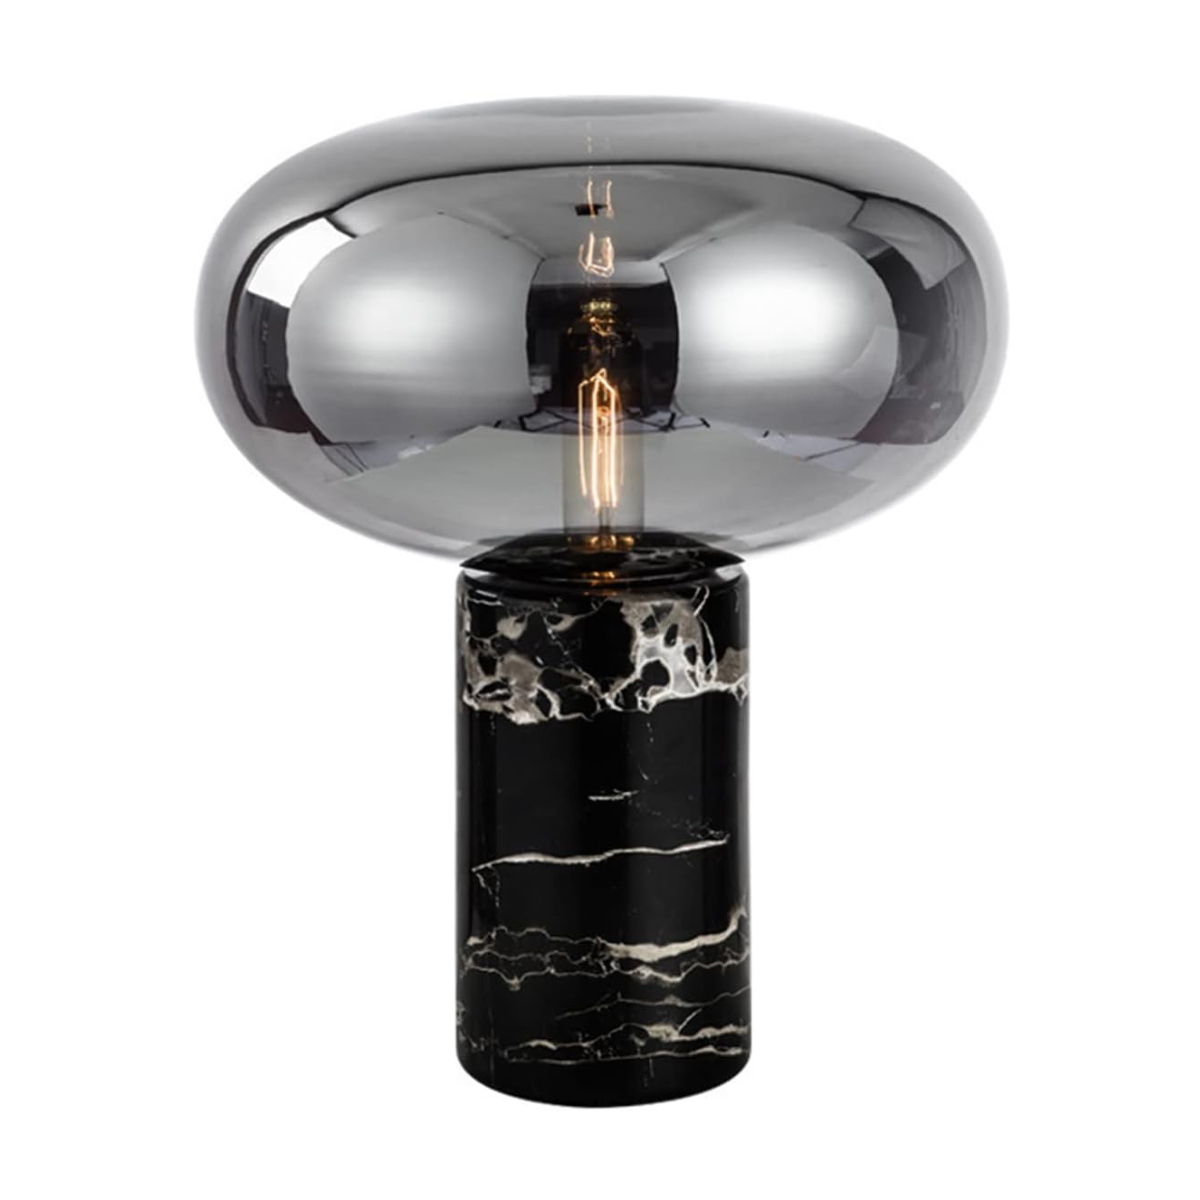 Kiara-Oval-Shaped-Marble-Based-Table-Lamp-5